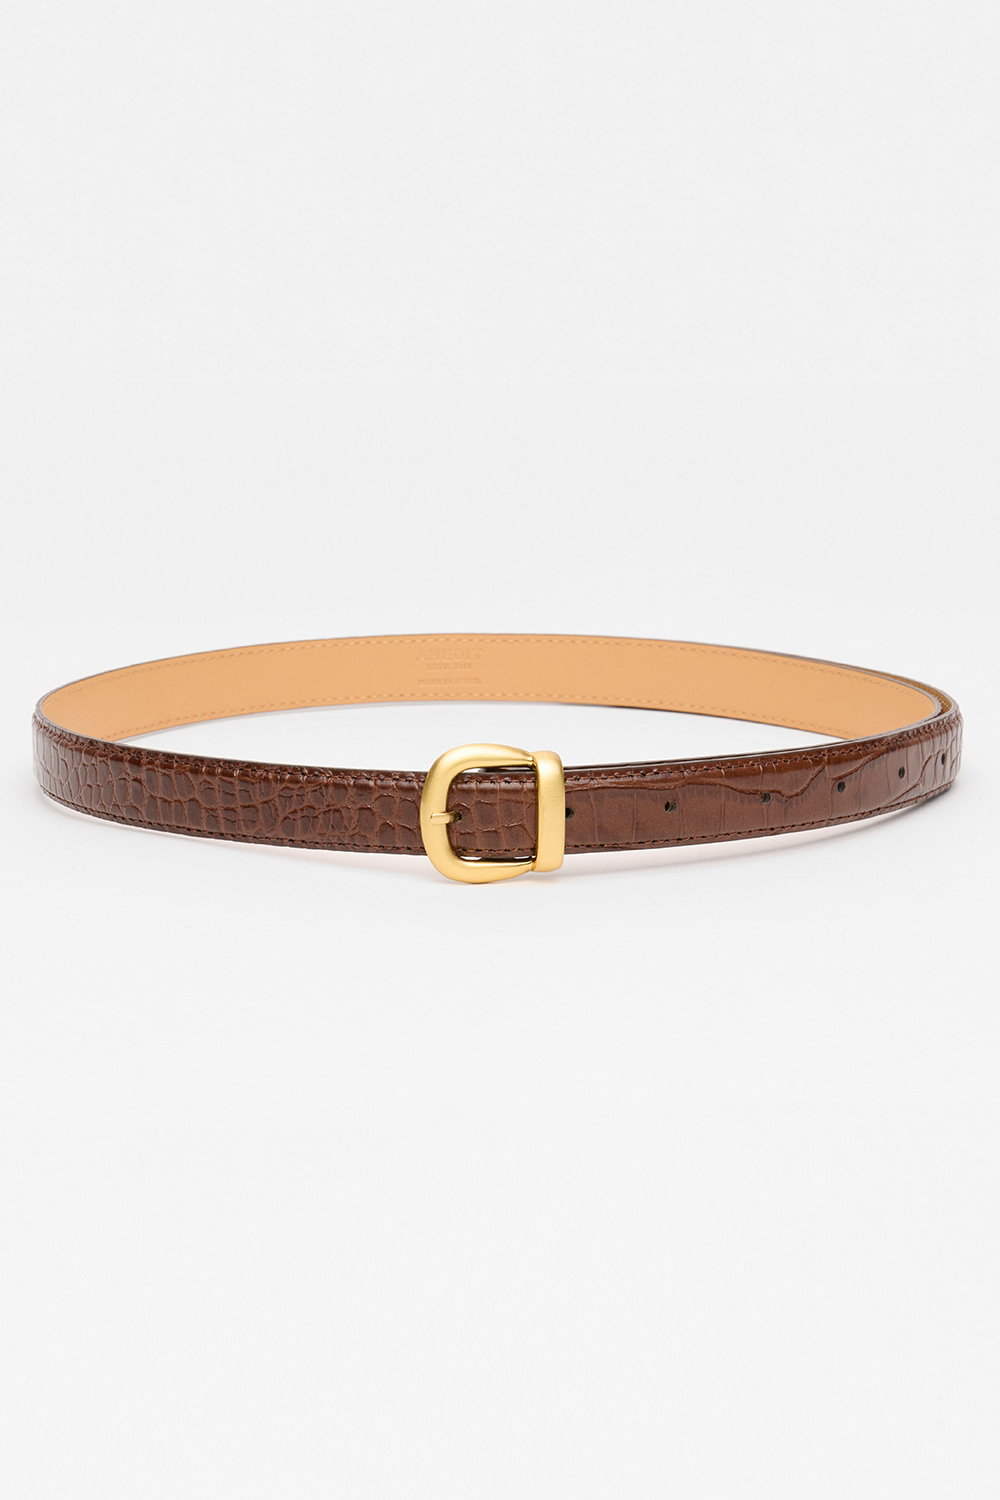 Croc Classic Leather Belt_Brown Gold